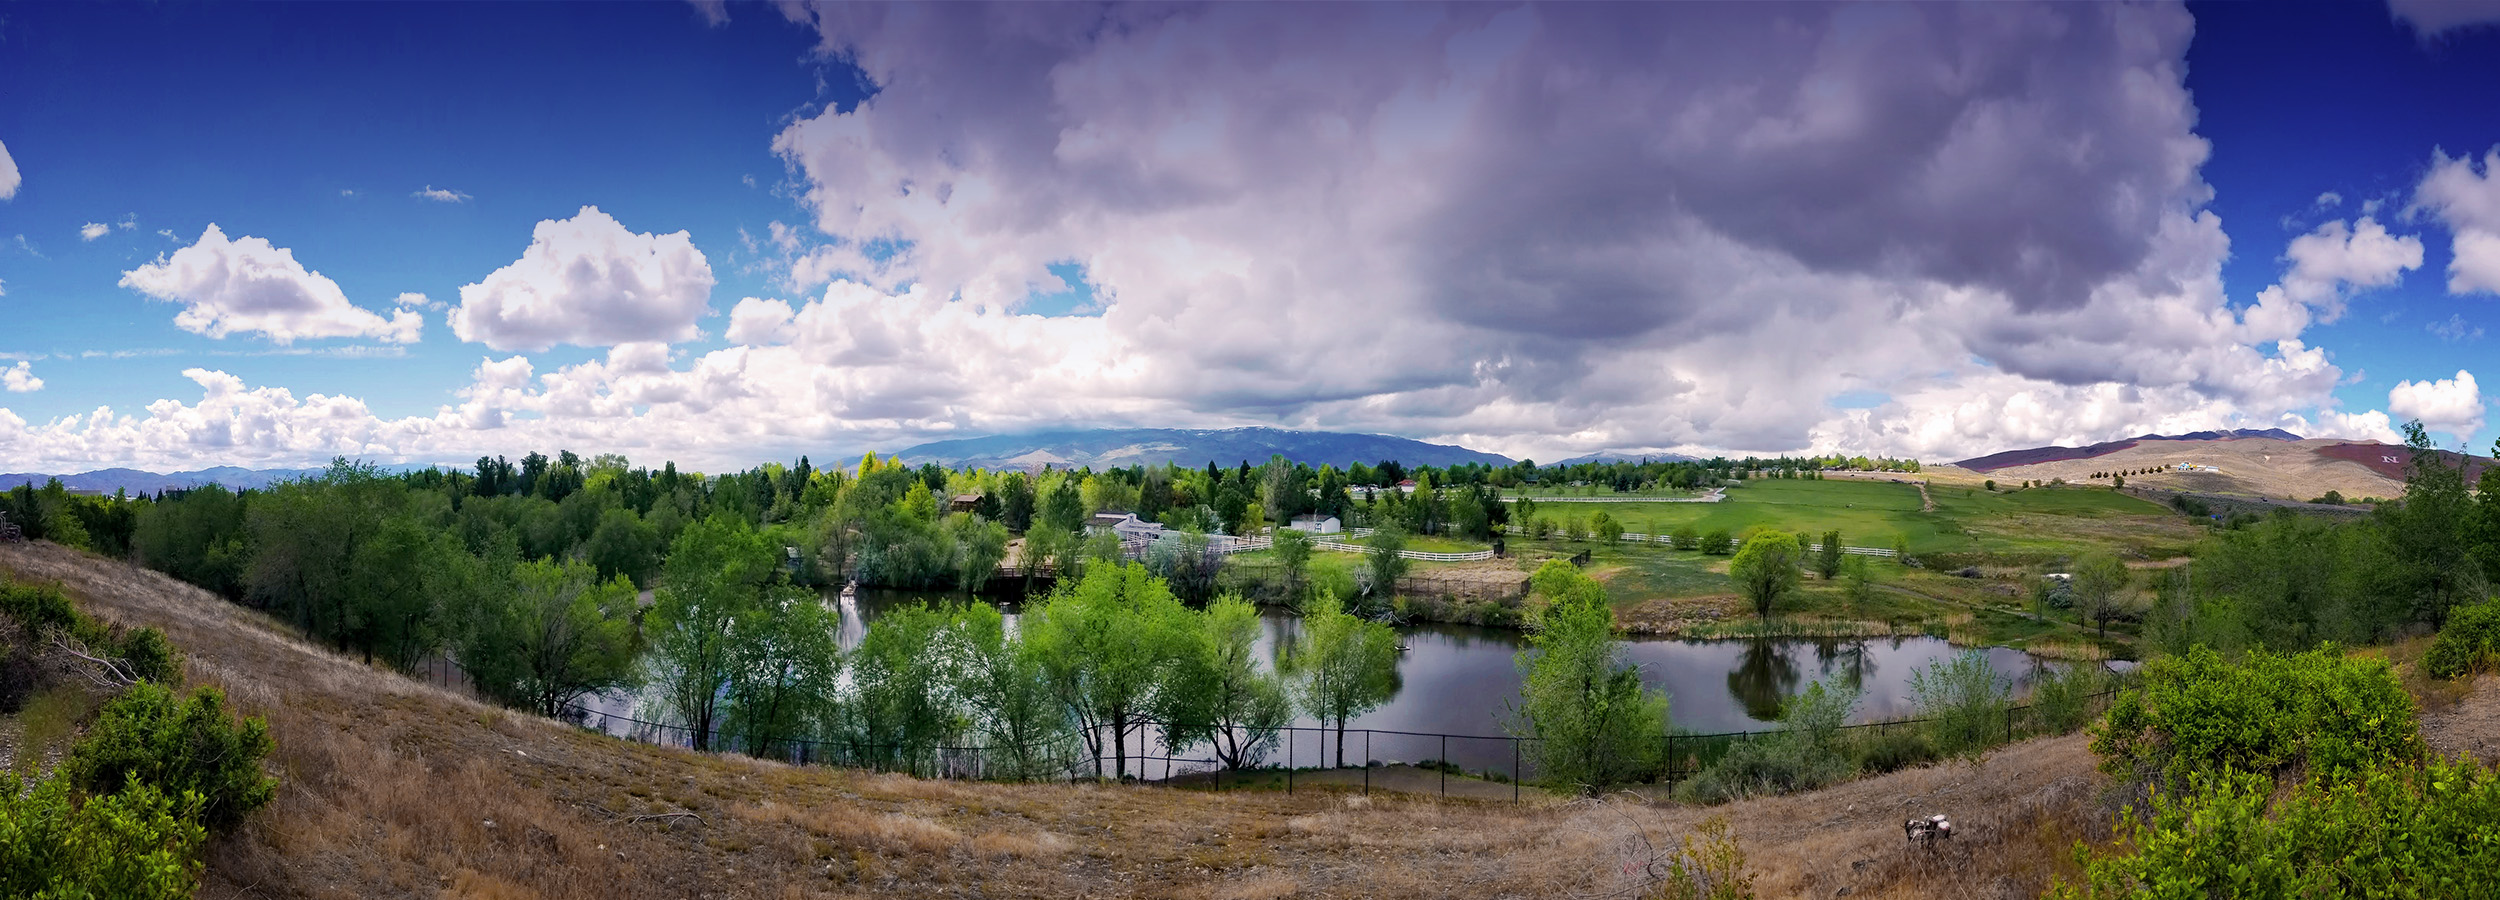 Landscape view of Rancho San Rafael Park